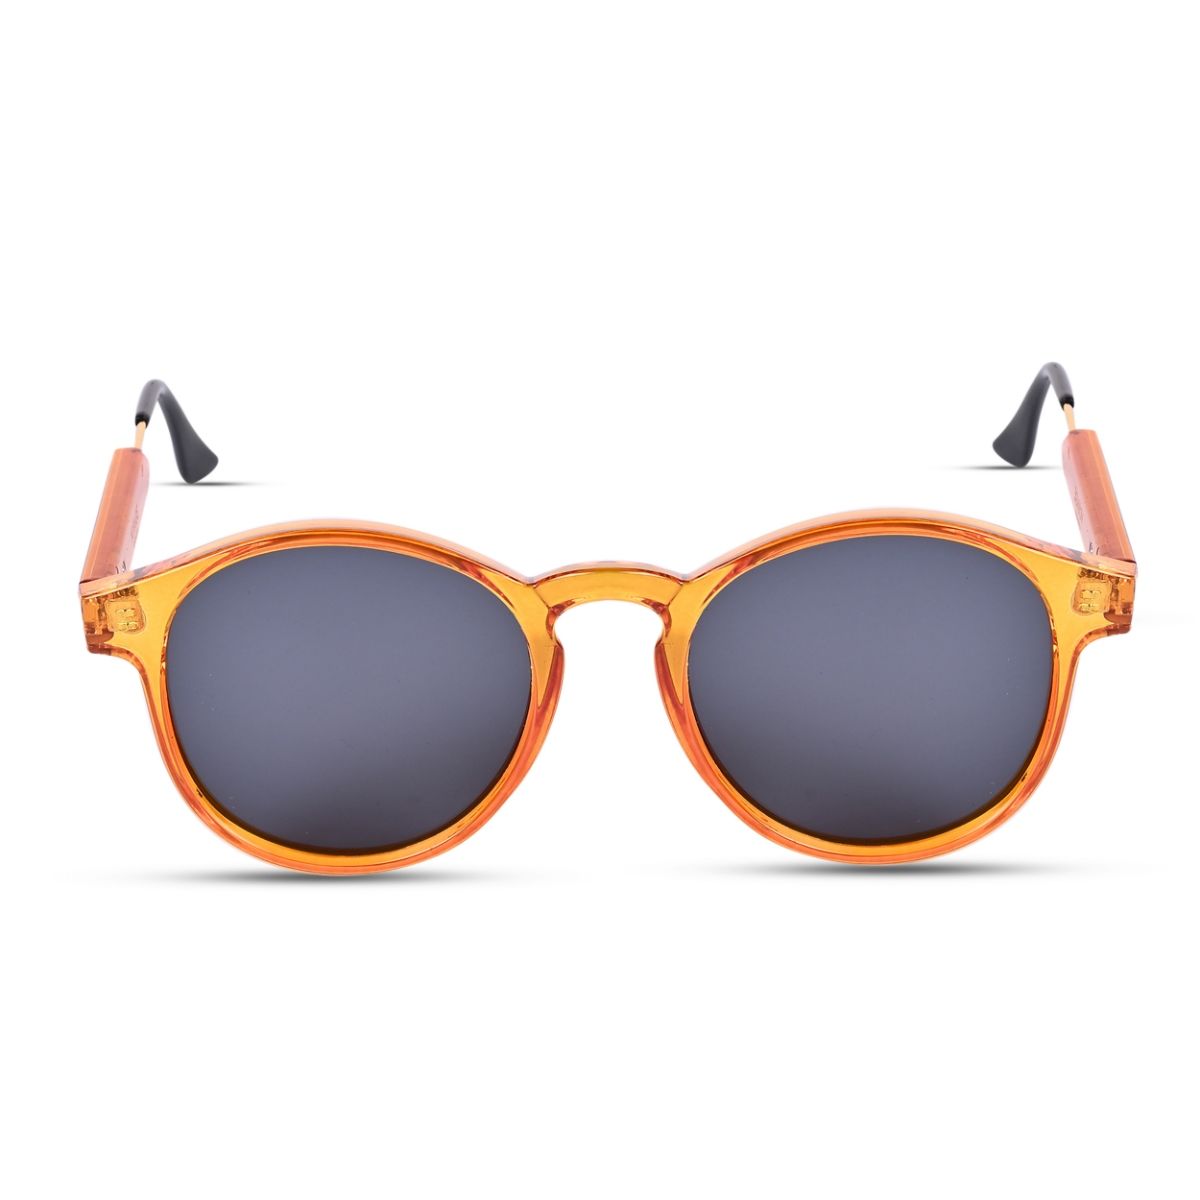 Oakley - Gibston - 009449-0960 - Grey Translucent Orange Mercury - Polarized  - Sunglasses - Shashkay: Pakistan's #1 Eye Wear (Sunglasses,Optics) Store